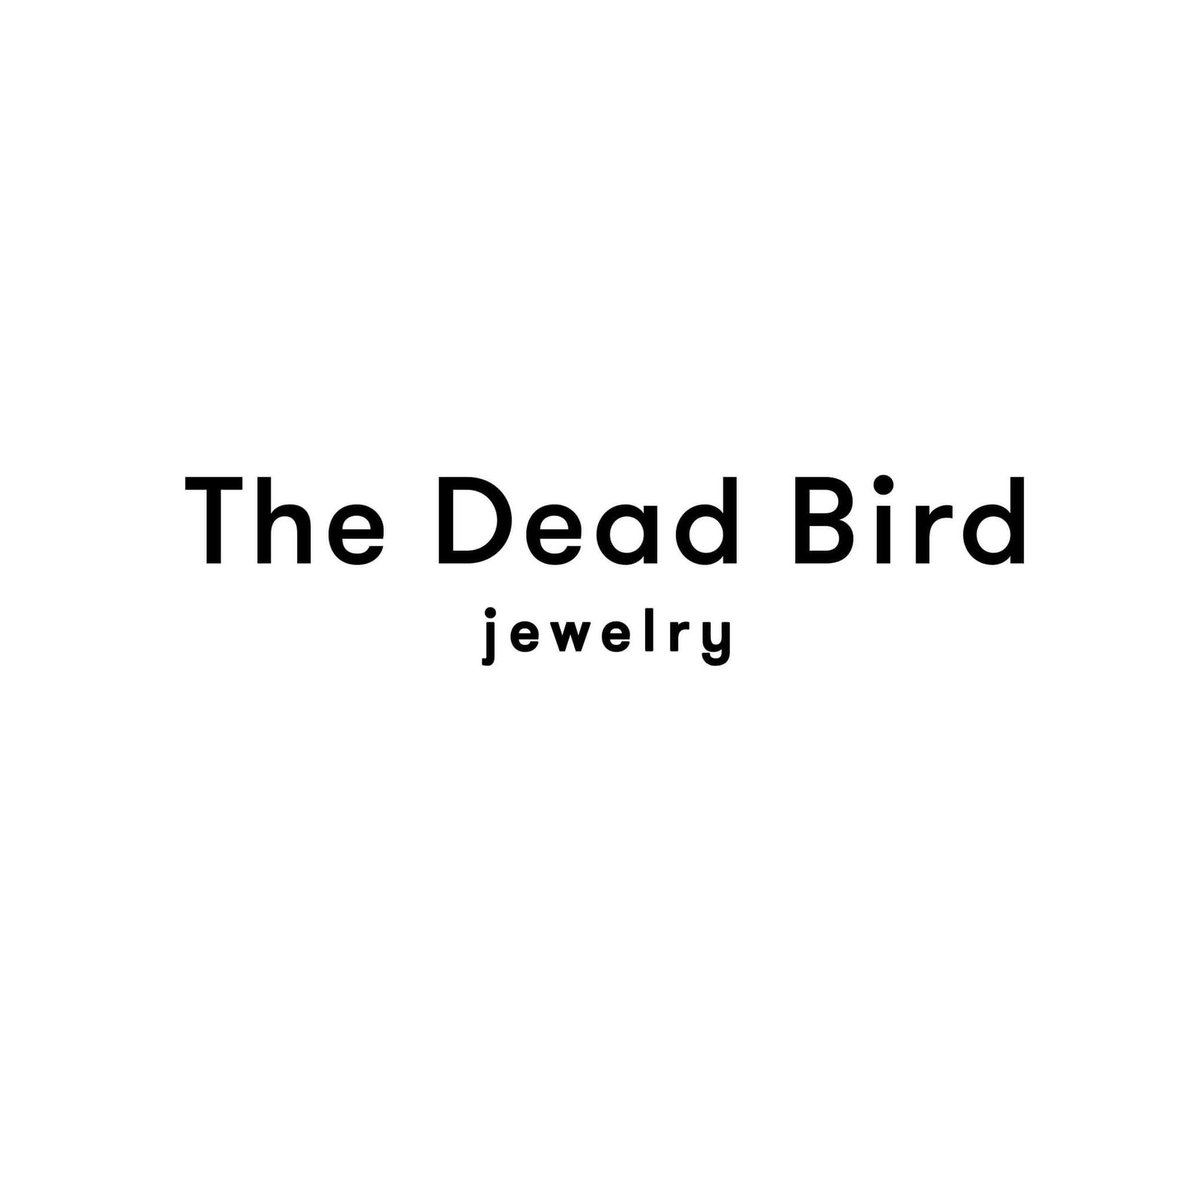 The Dead Bird Jewelry